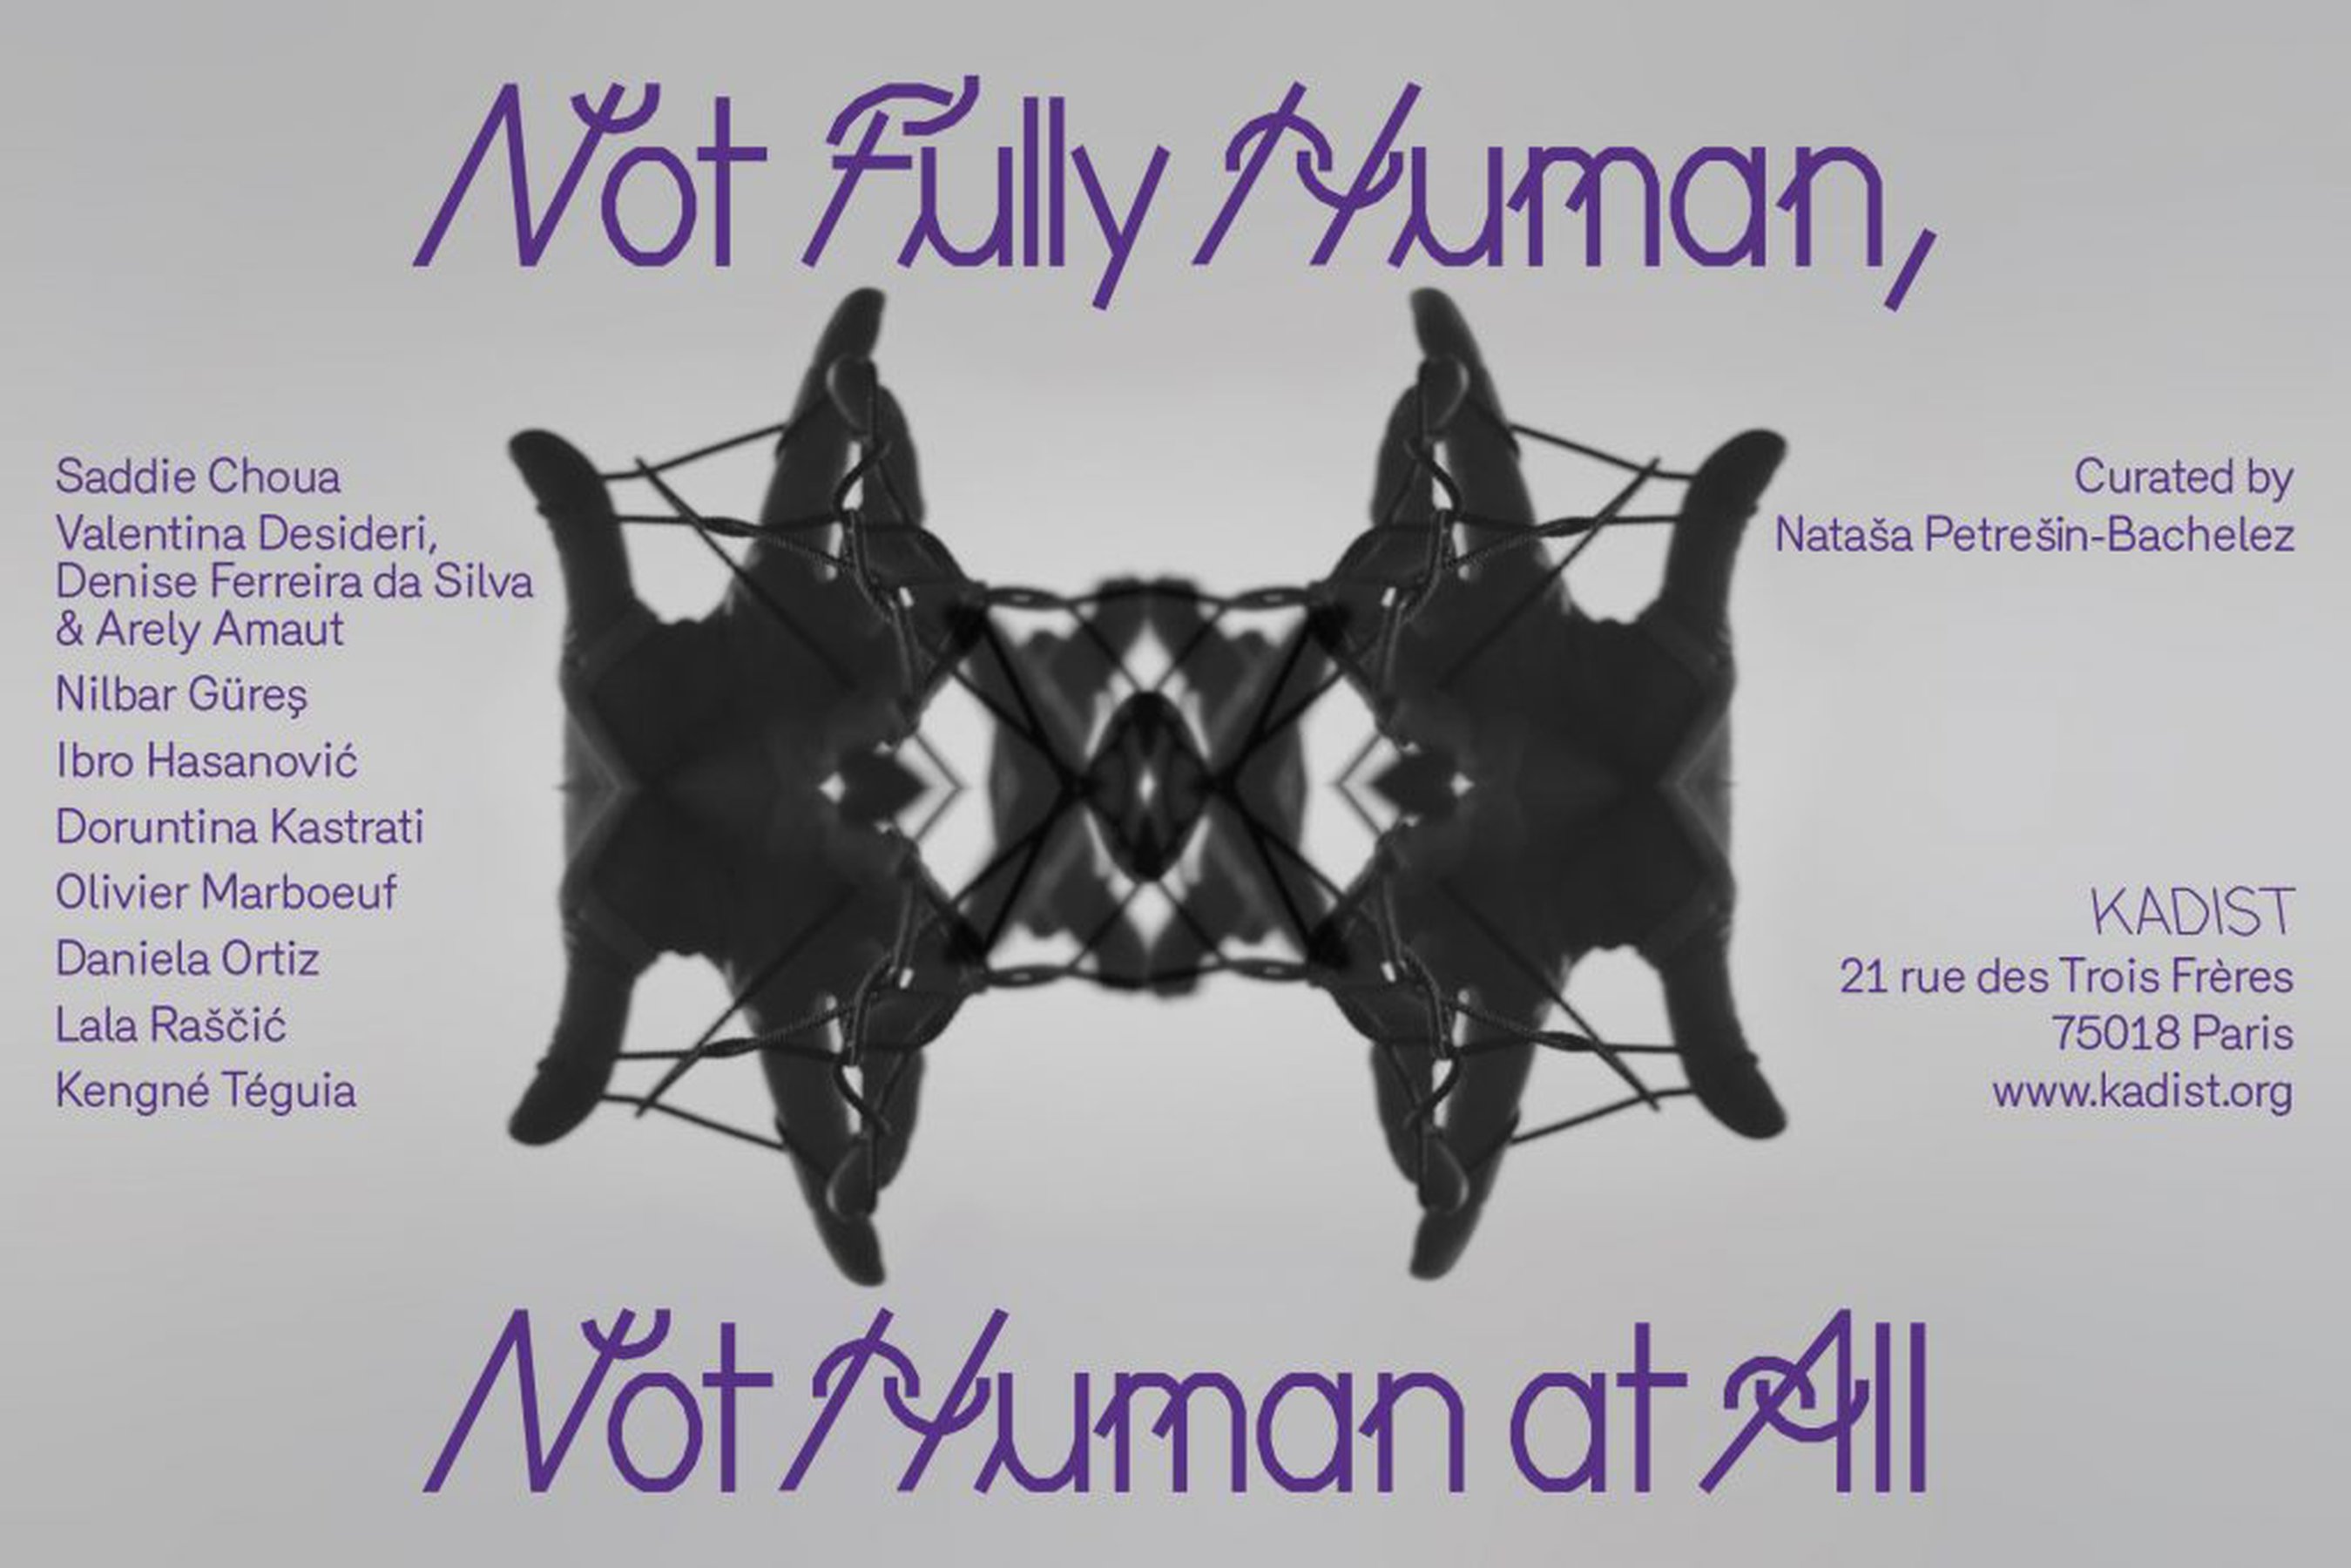 Not Fully Human, Not Human at All